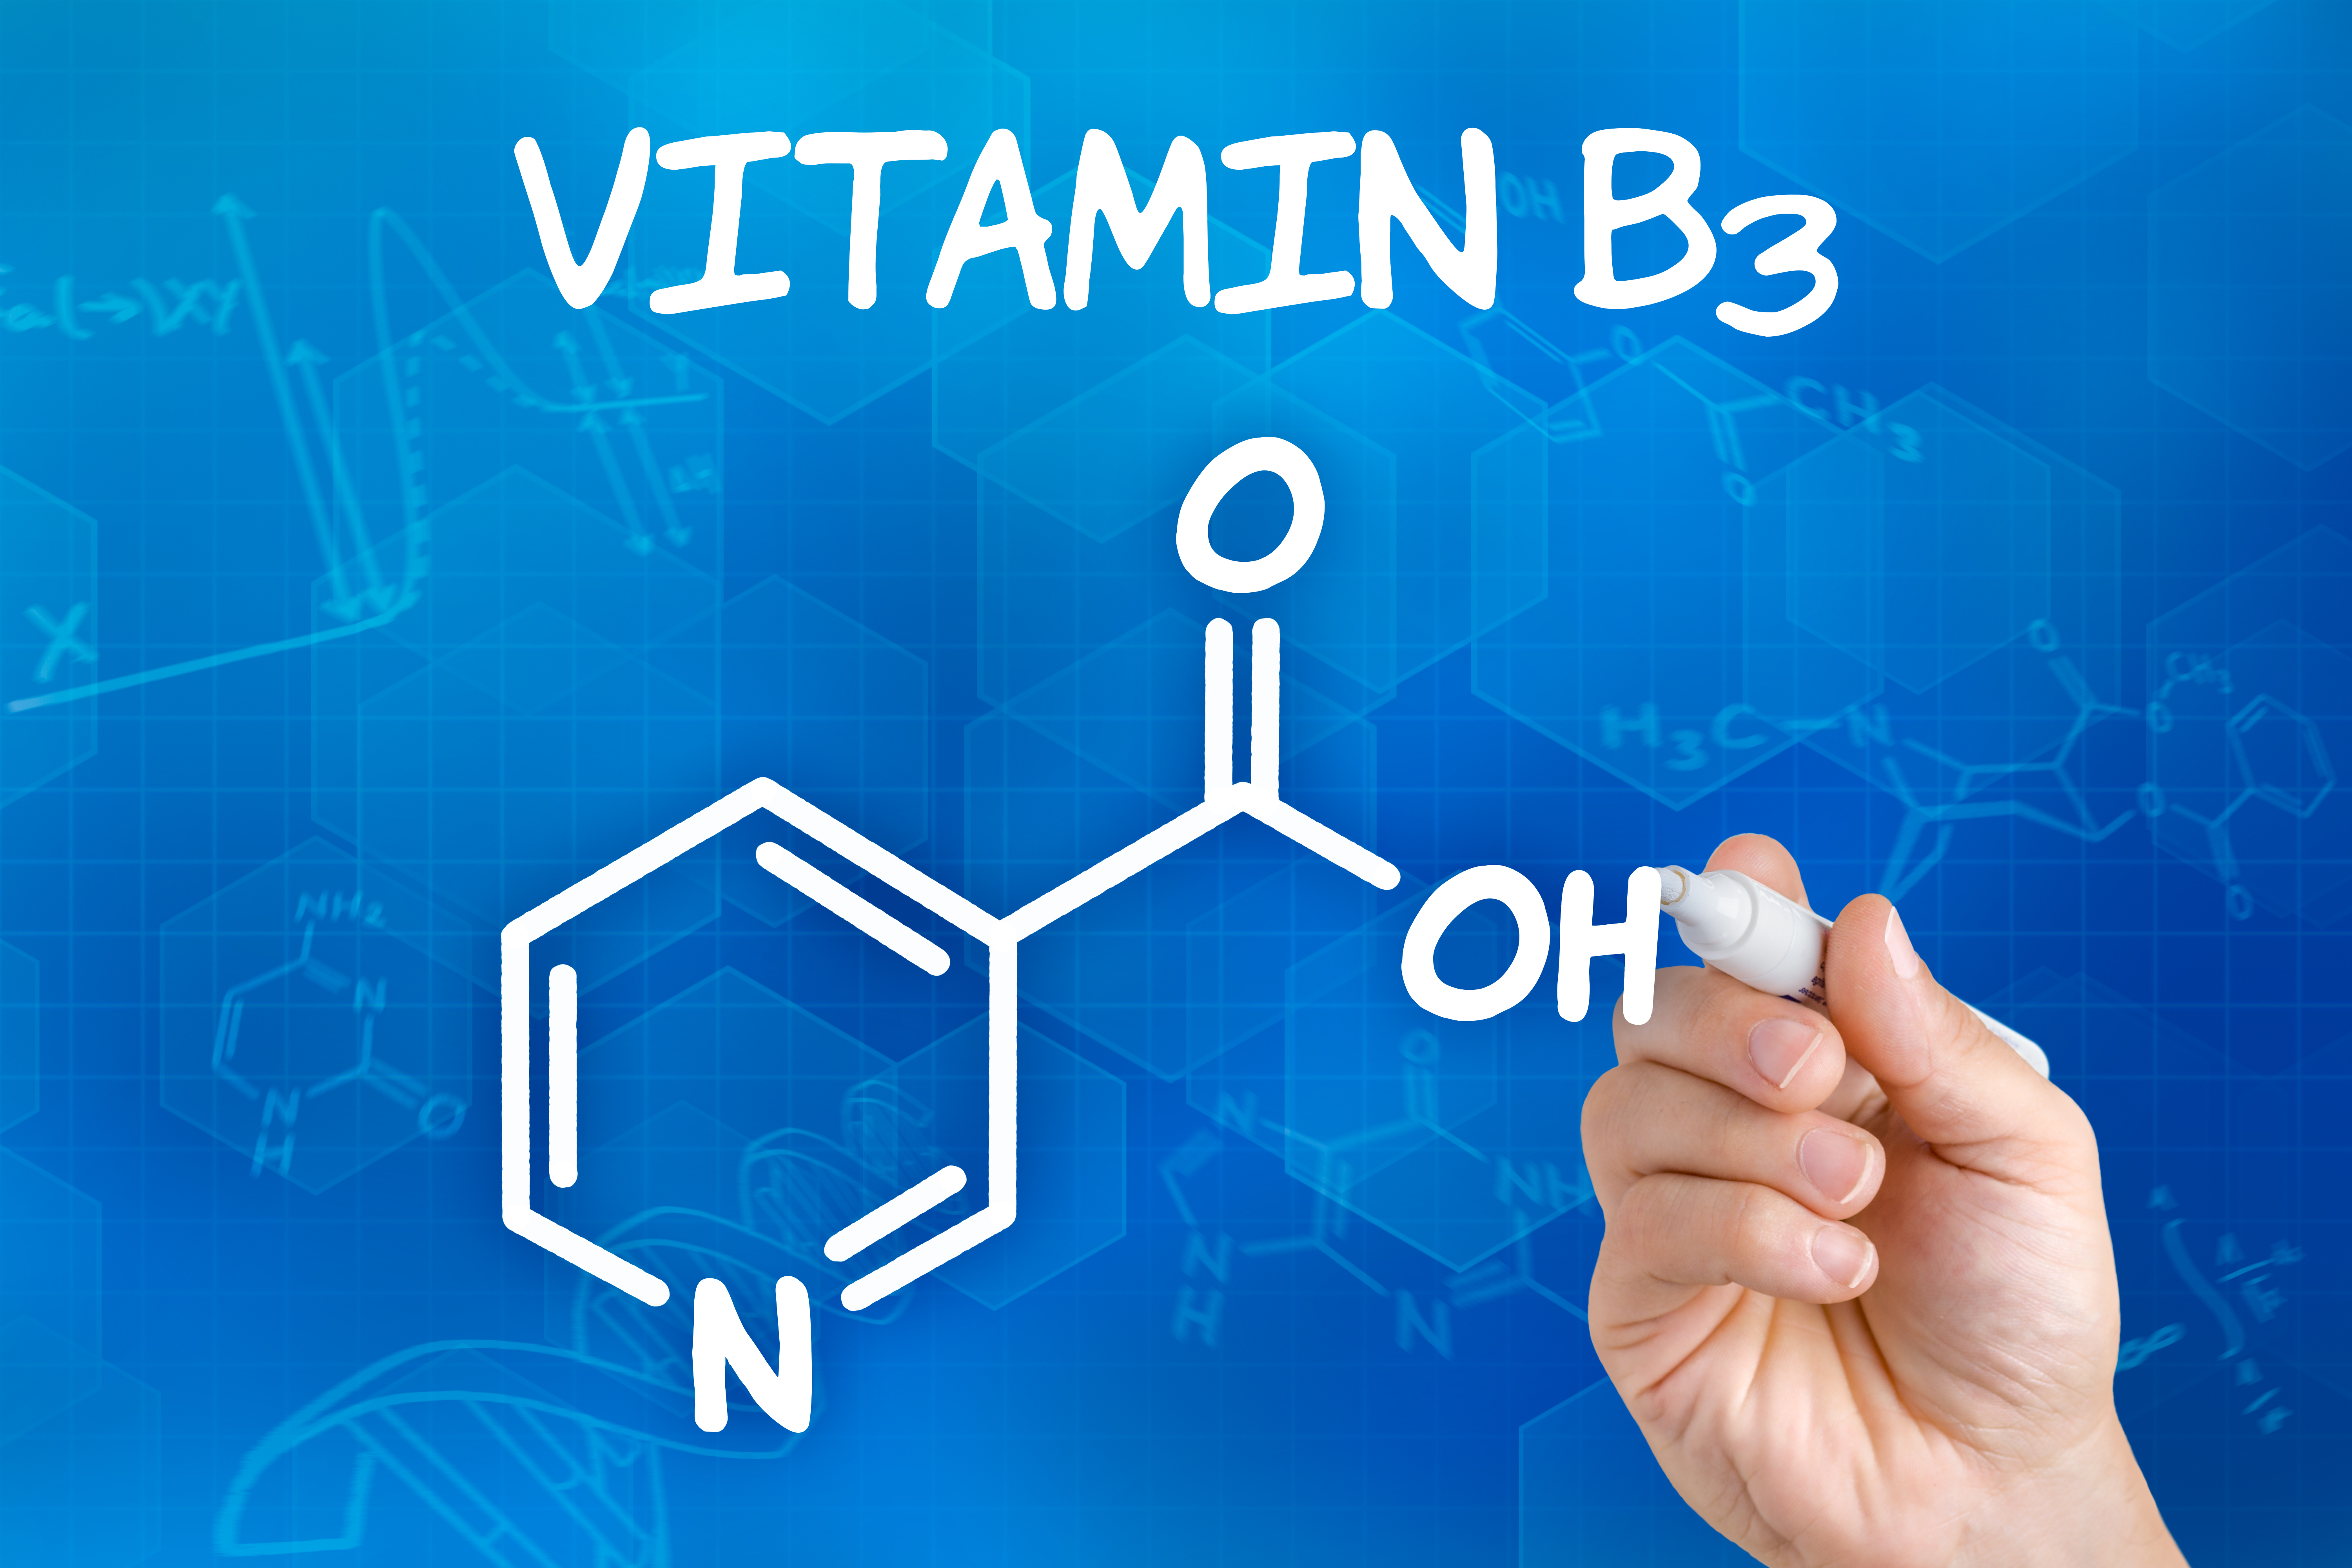 Vitamin B3 and FA